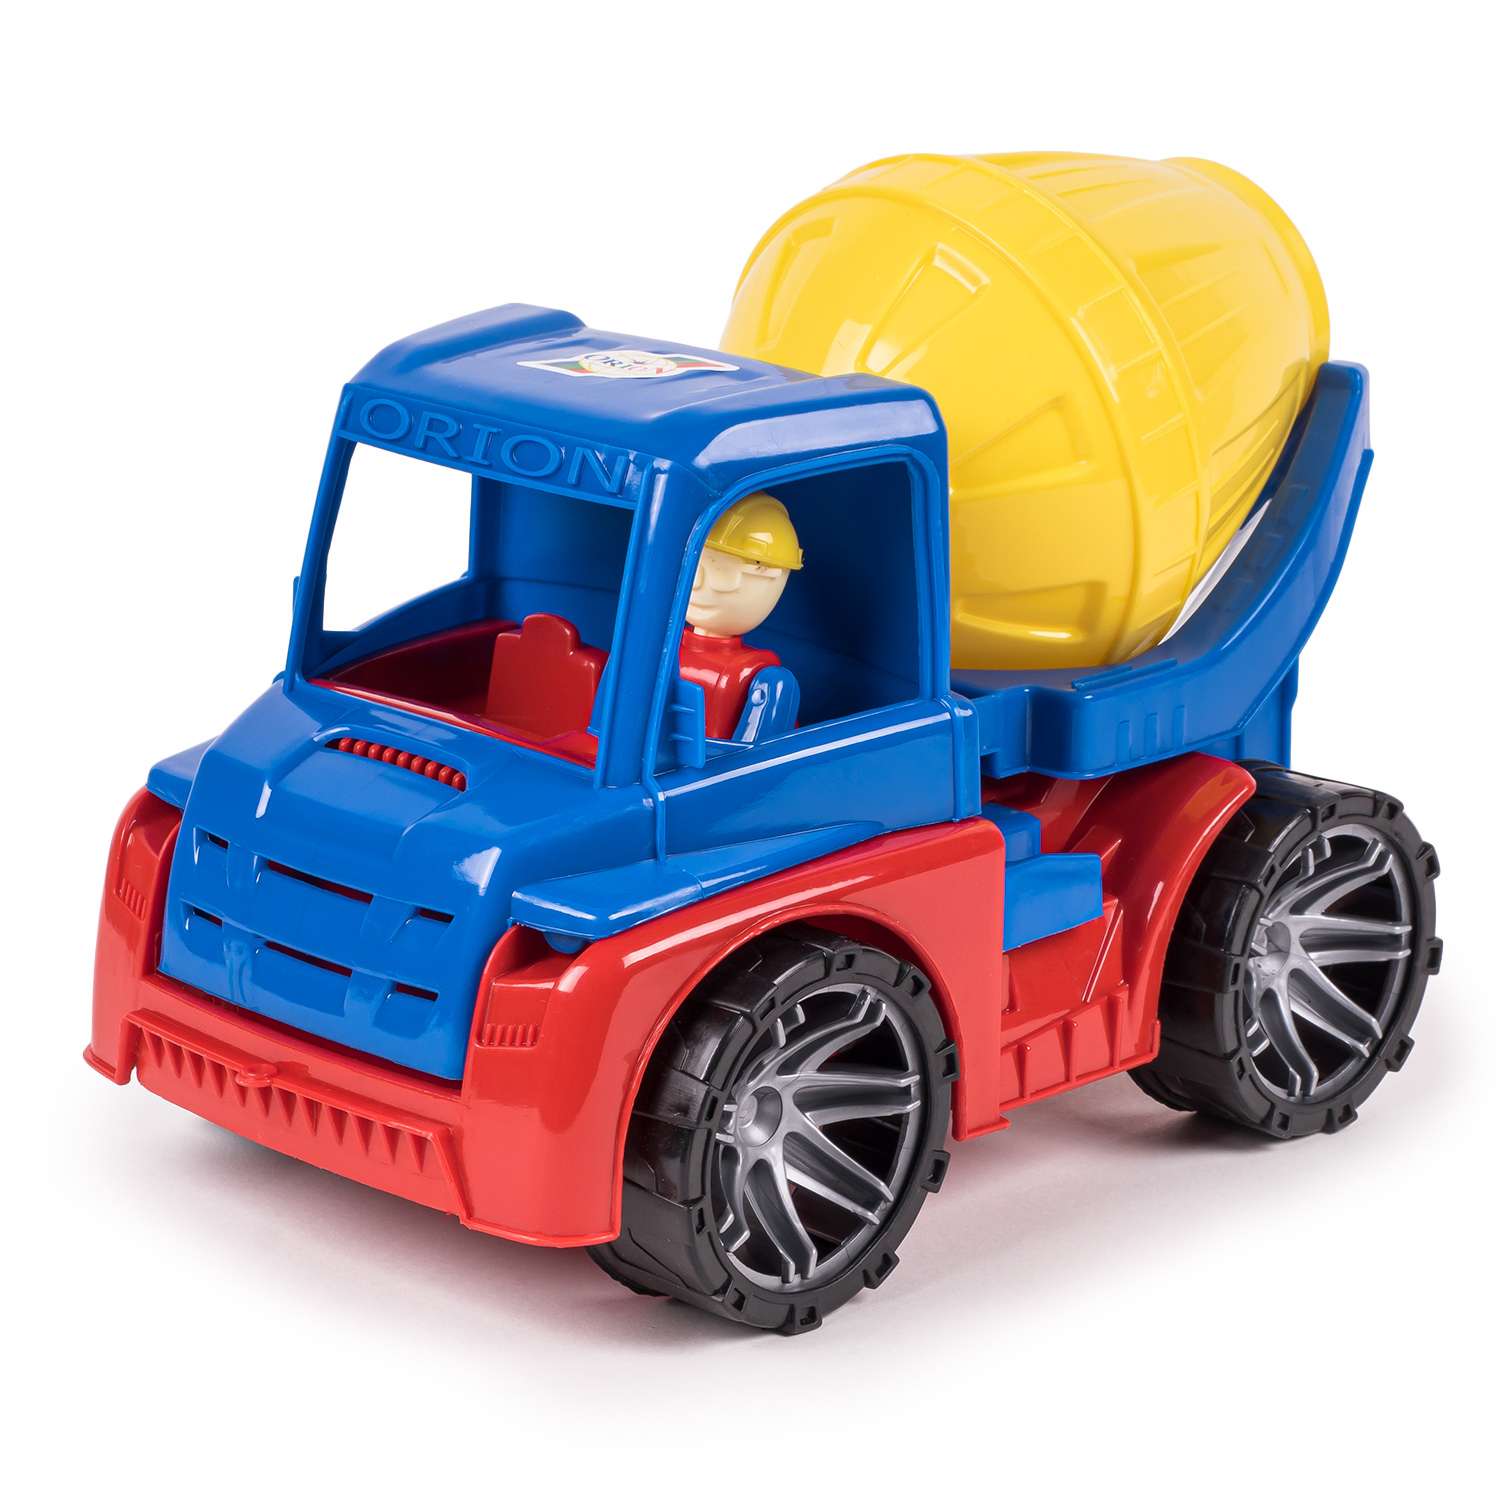 Автомобиль ORION TOYS МП м4 бетономешалка 294/красный, желтый, синий - фото 1